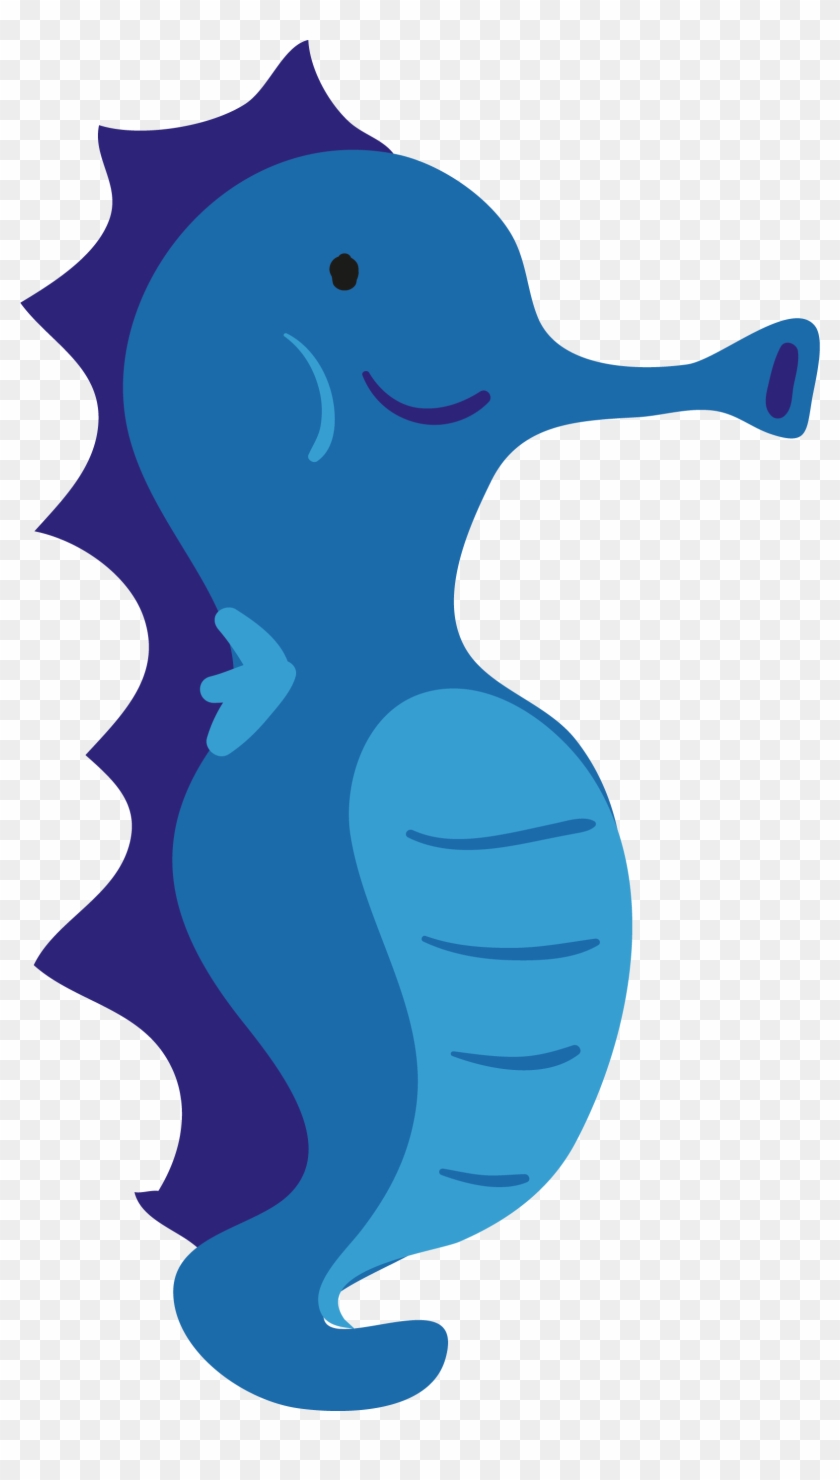 Seahorse Cartoon Clip Art - Seahorse Cartoon Clip Art #724780